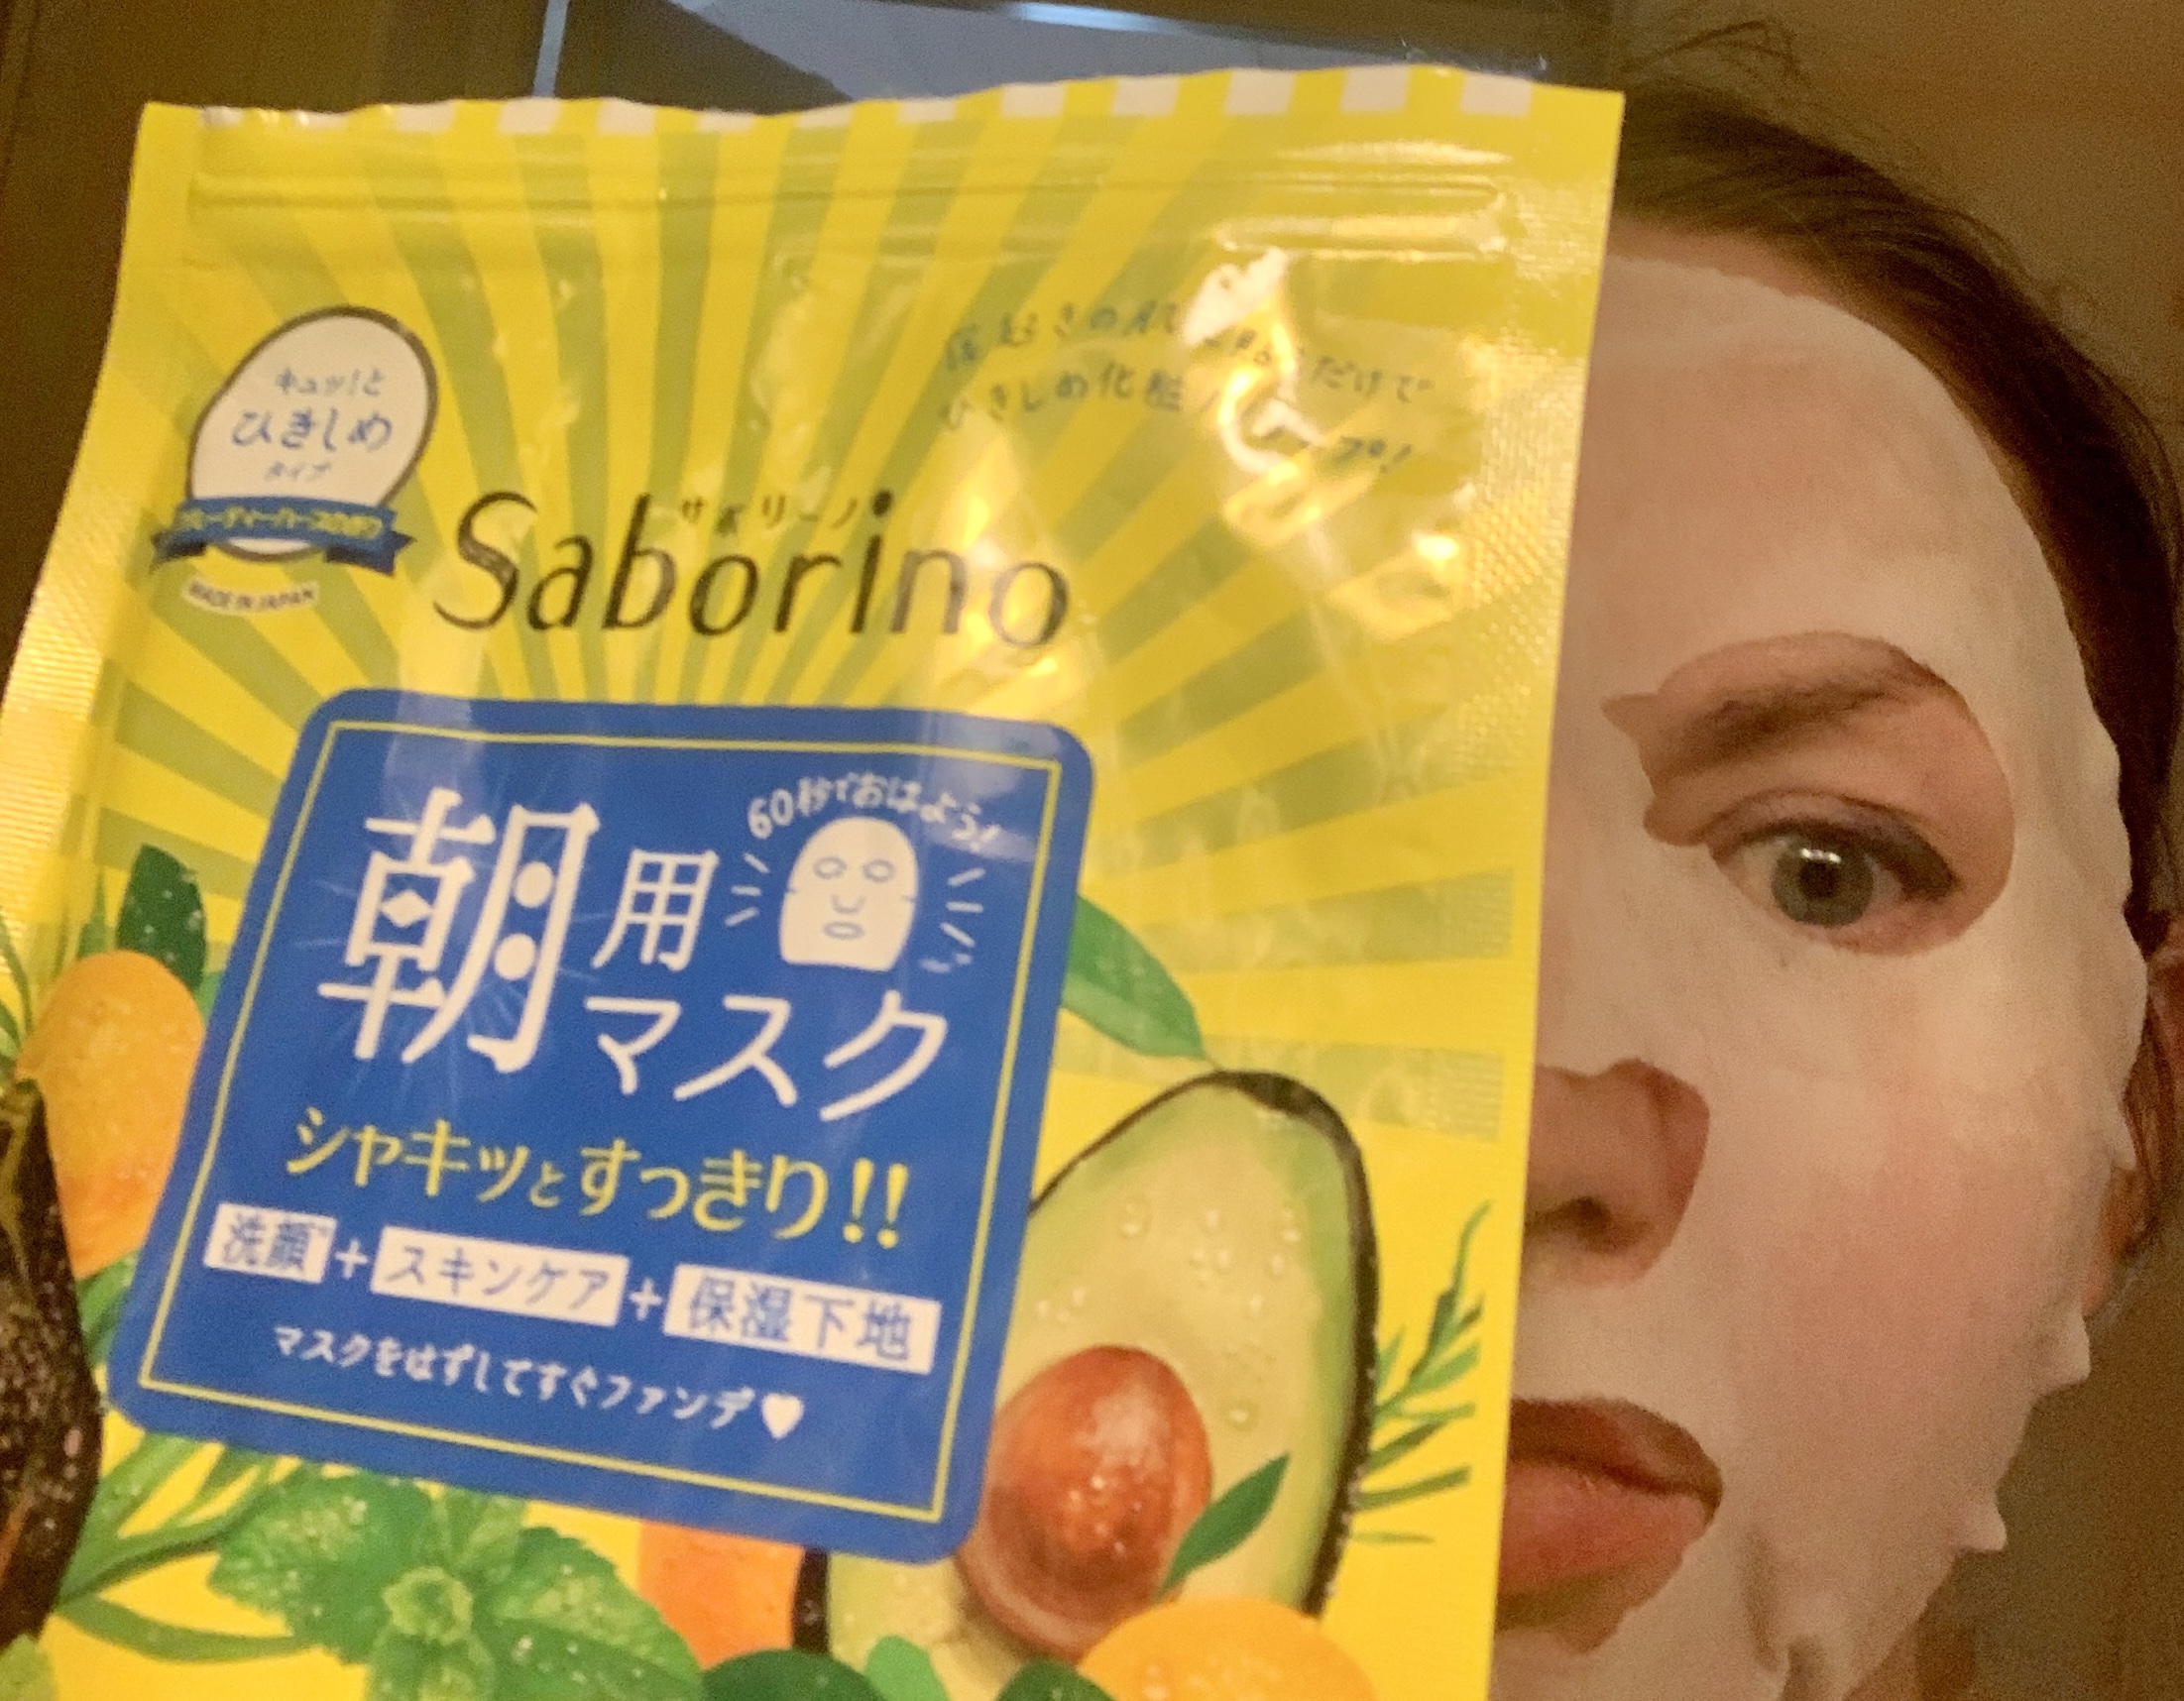 SaborinoMorning Facial Sheet Mask